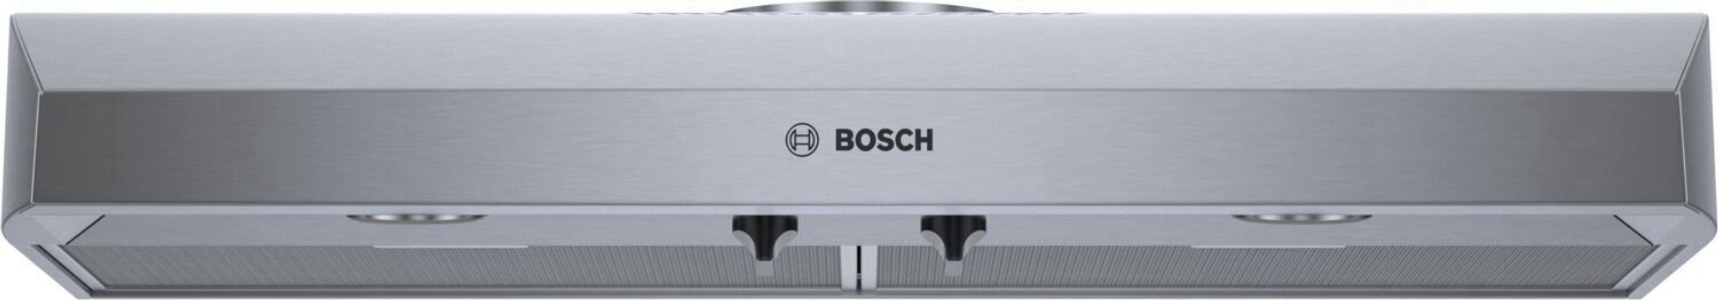 Bosch500 Series, 36" Under-cabinet Hood, 400 CFM, Halogen lights, Stnls